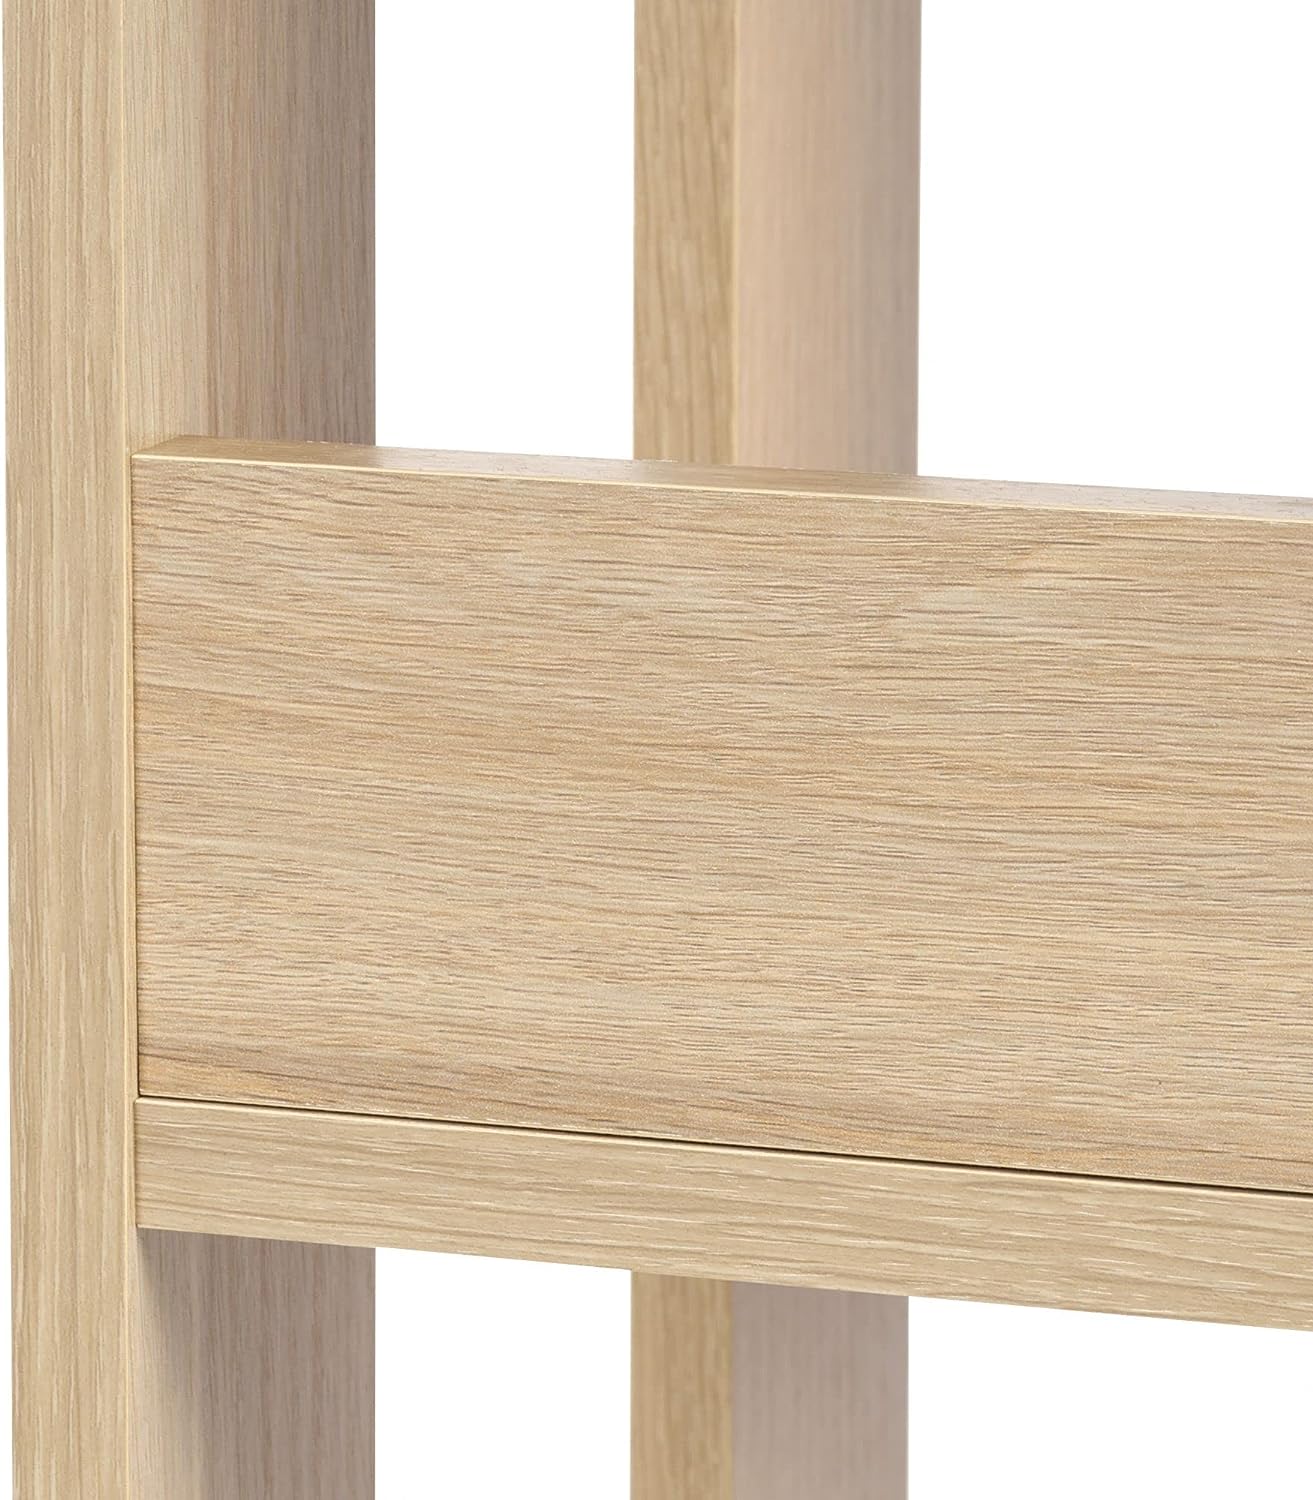 Iris Ohyama, 3-Tier Wooden Storage / Side Furniture / Storage Cabinet / Open Wood Rack / Shelf Display, Modular, Design, Office, Living Room - Open Wood Rack - OWR-200 - Light Brown, W20 cm